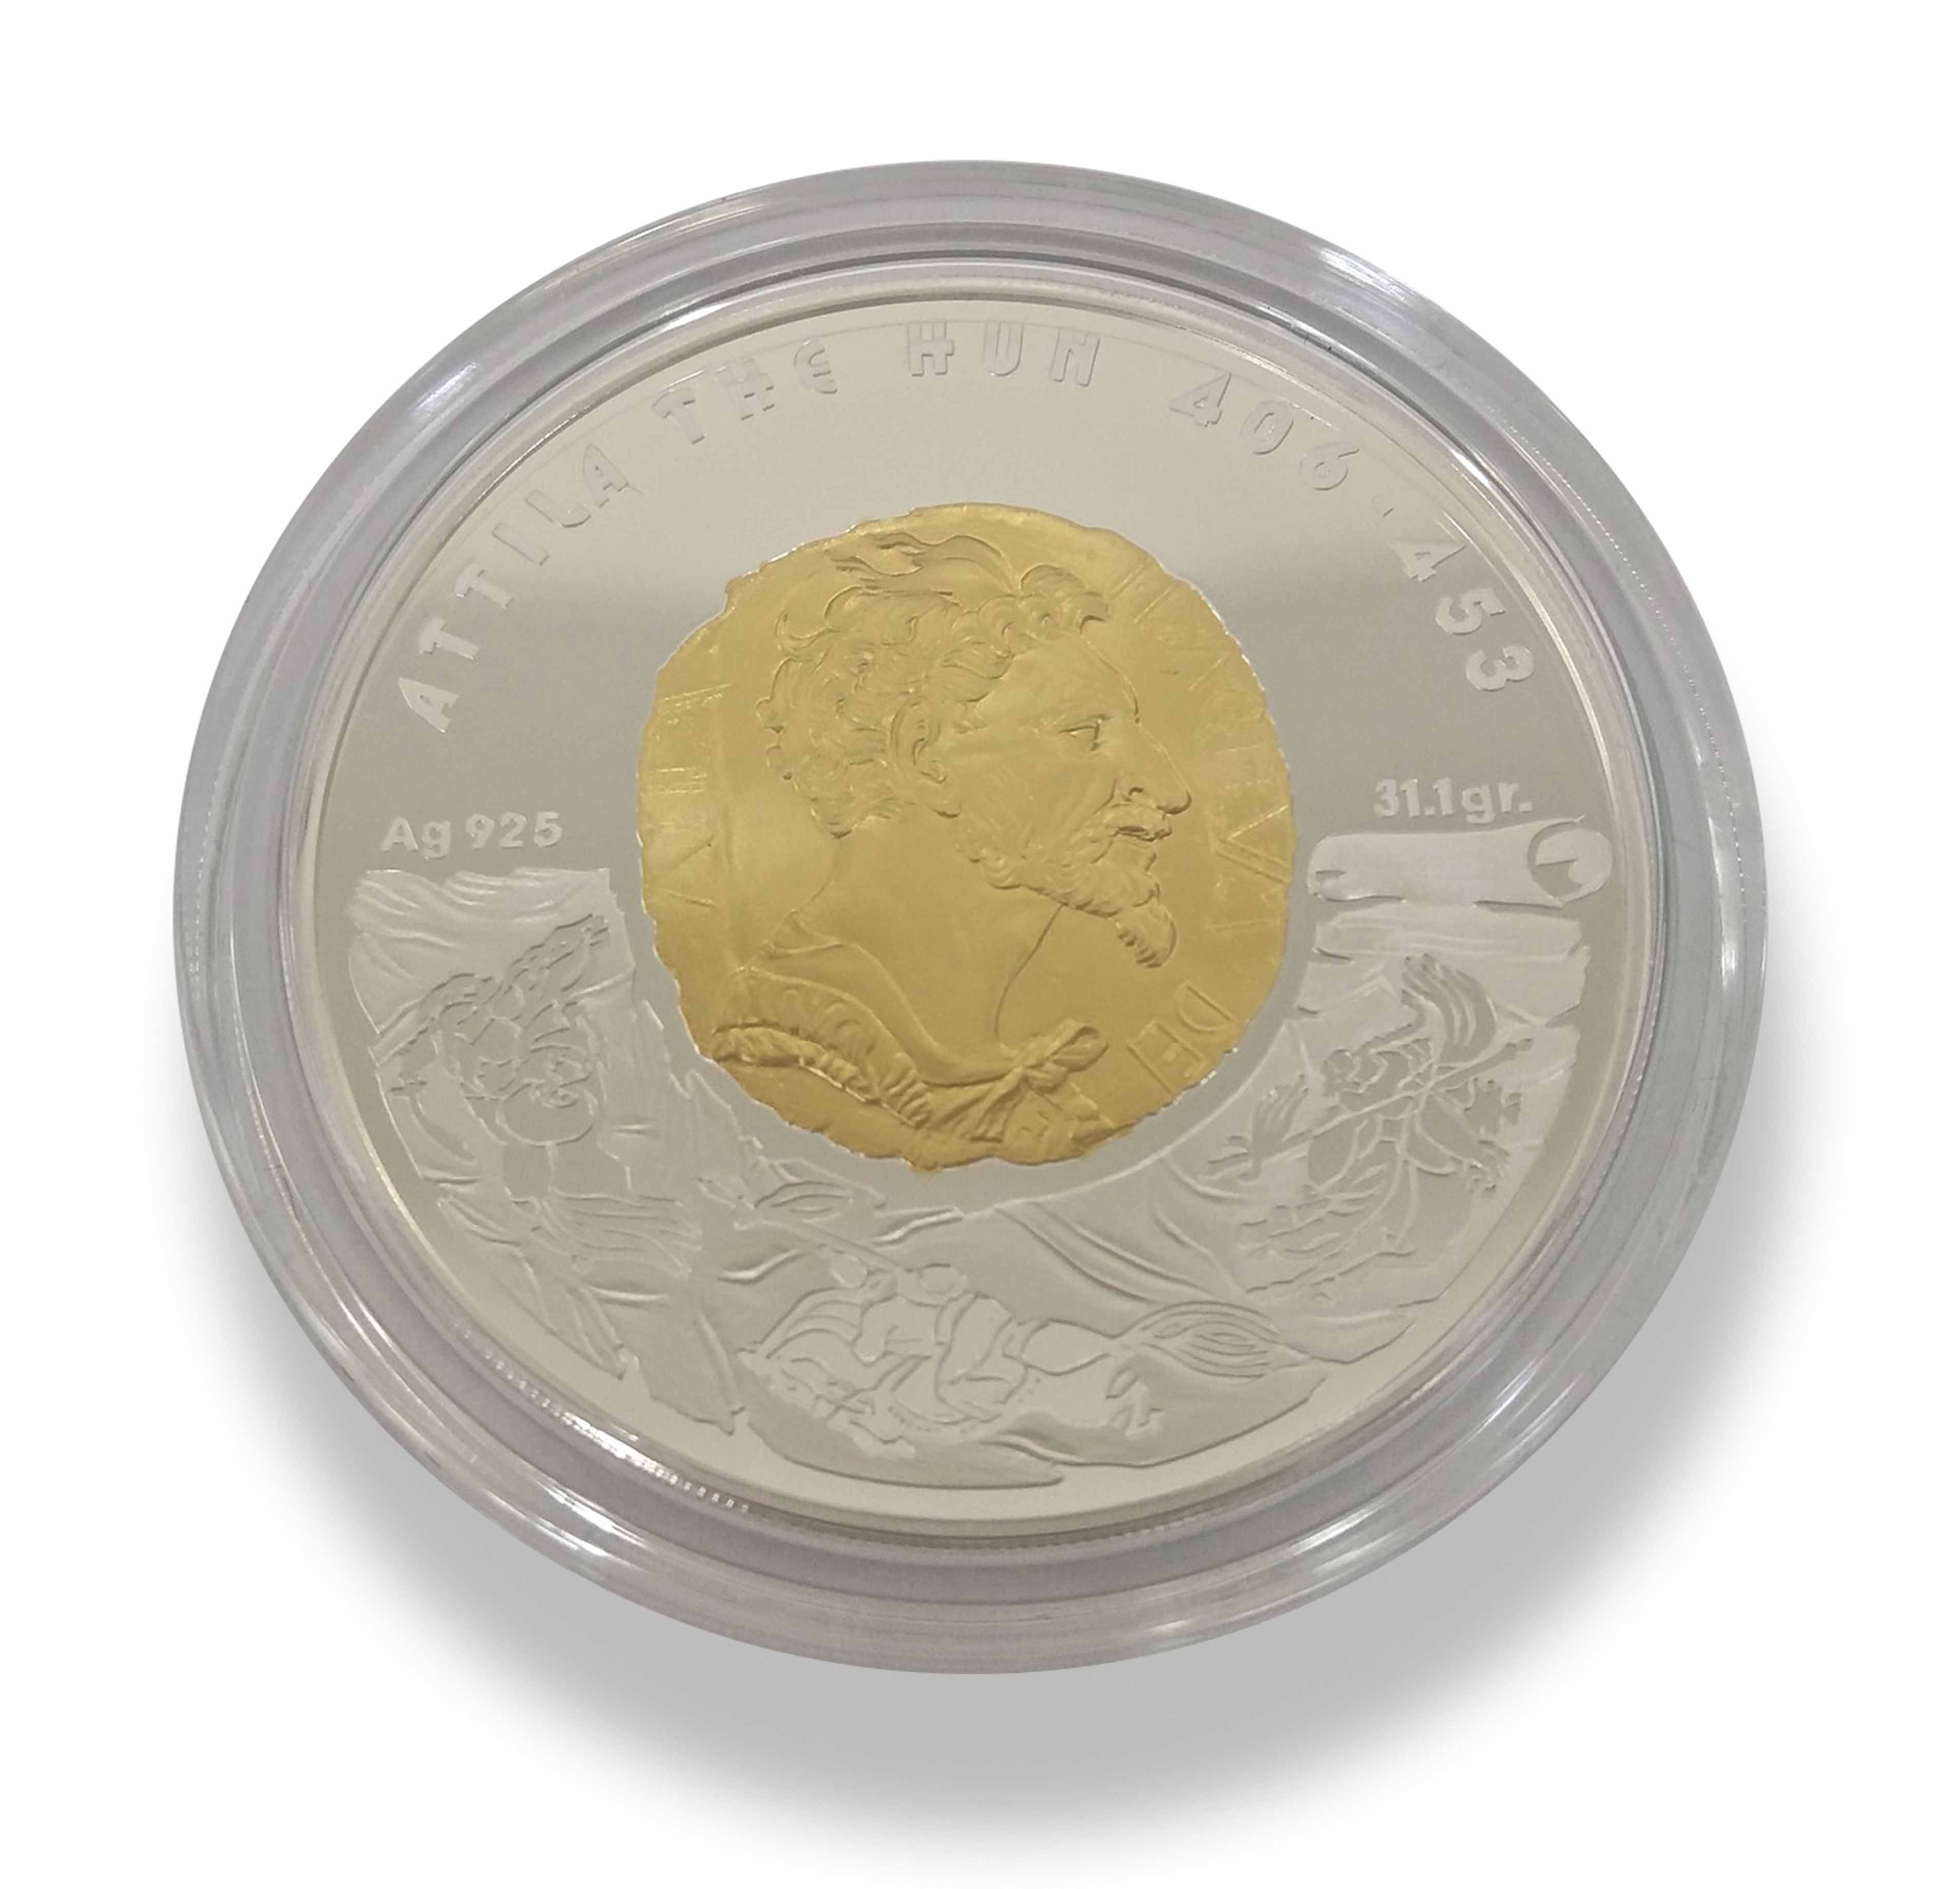 Buy Silver 2009 Attila the Hun 100 tenge proof coin in USD from Indigo